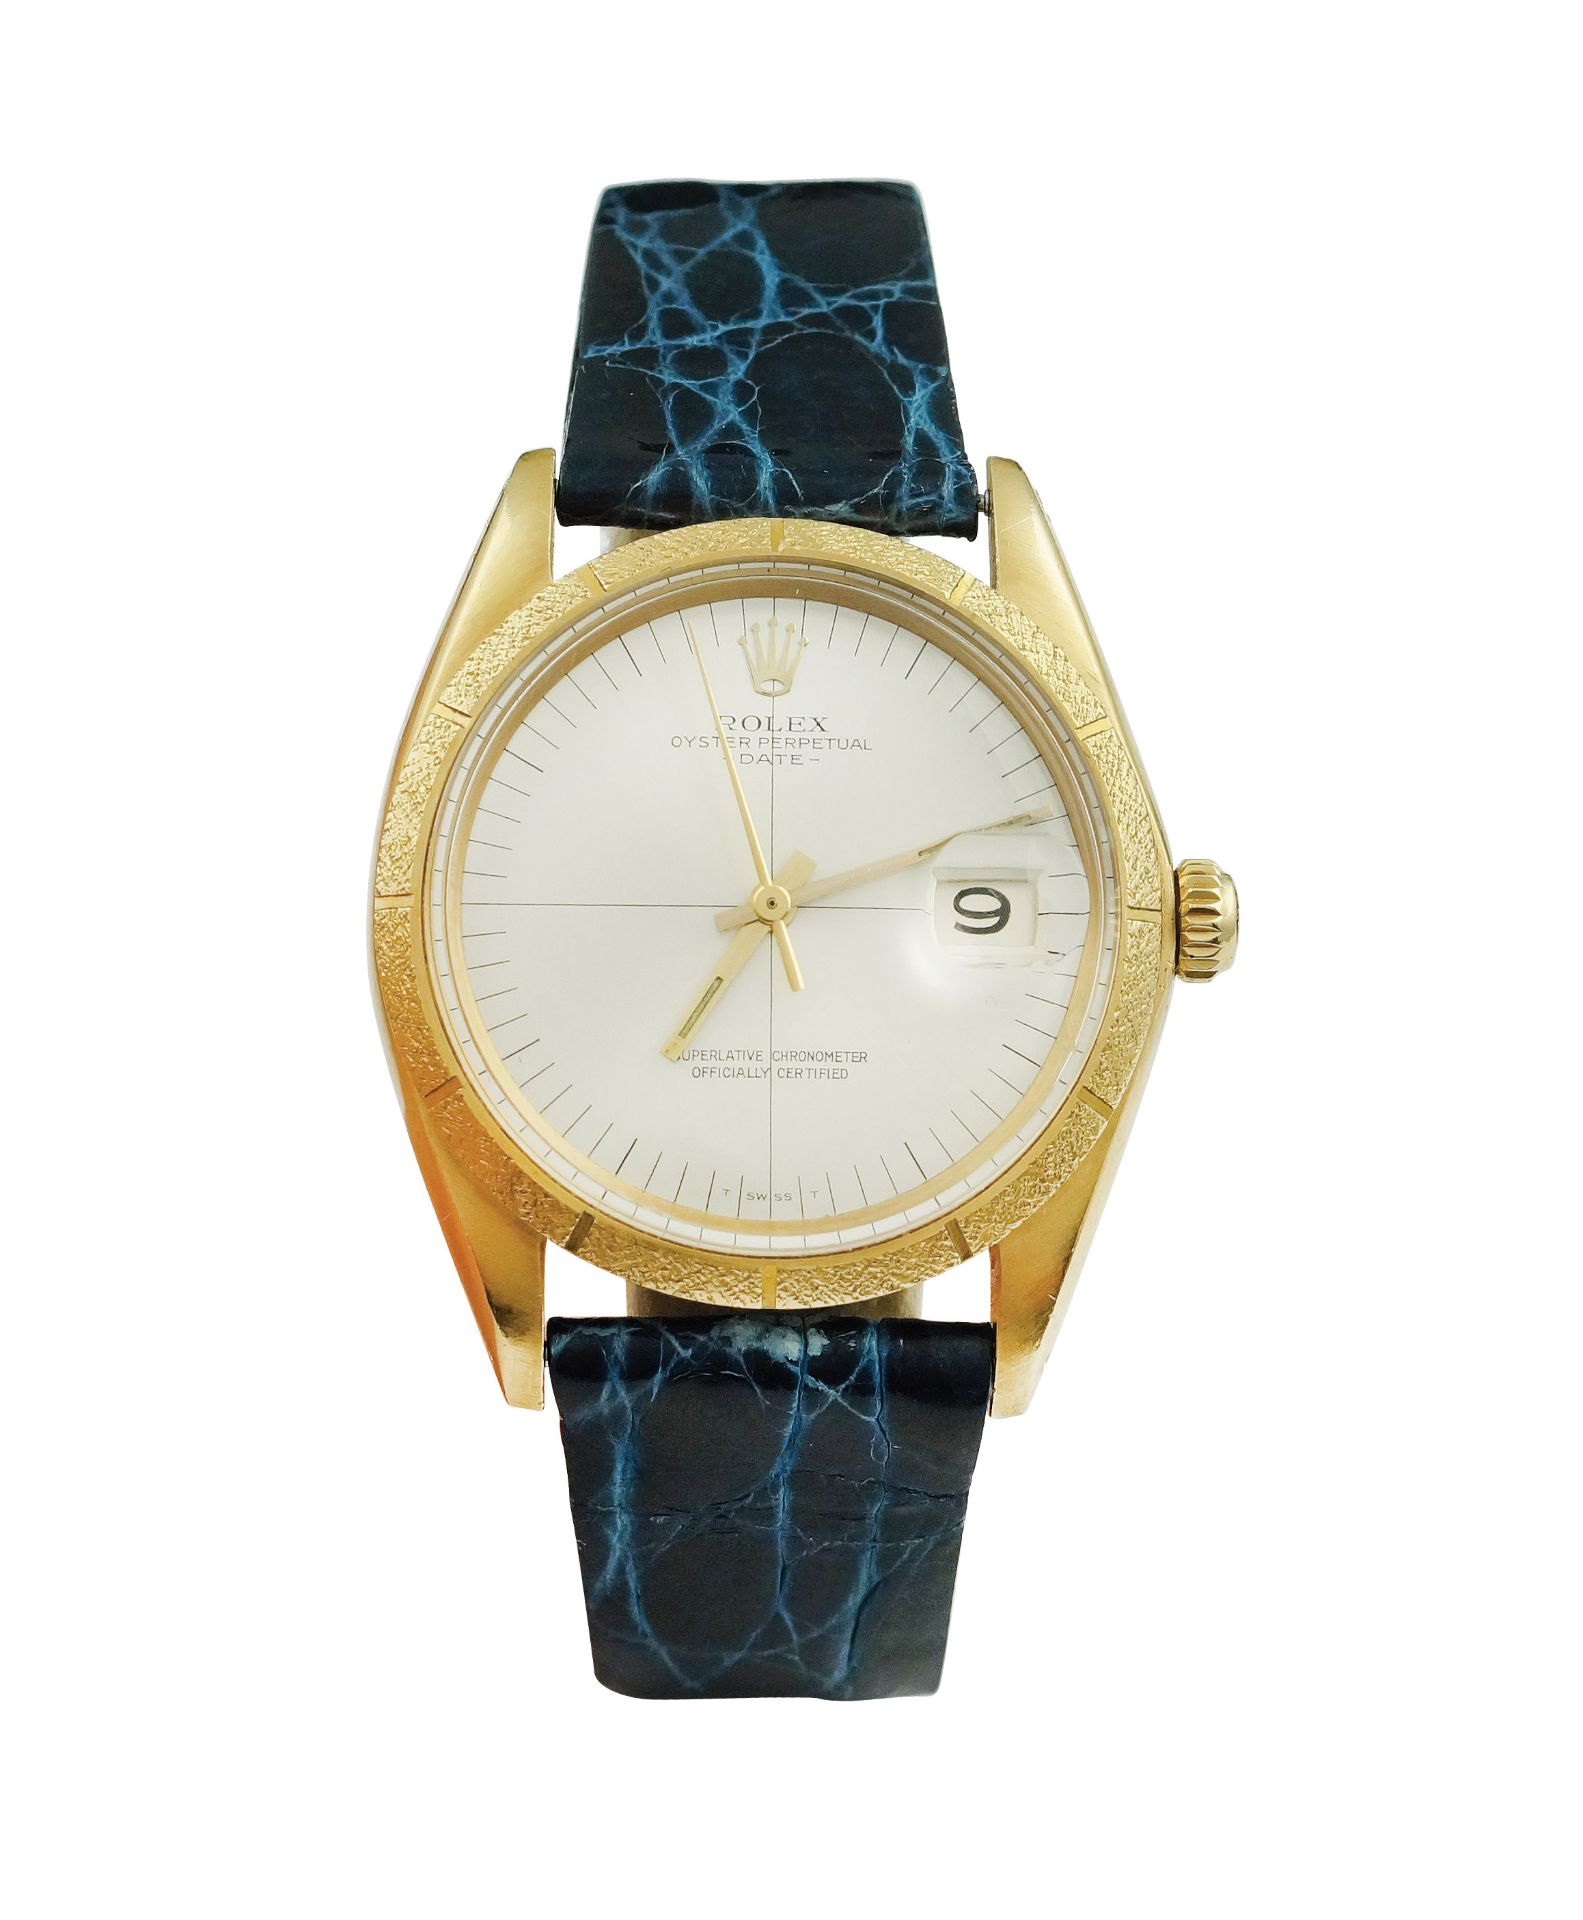 A Rolex Oyster Perpetual Metropolitan wrist watch